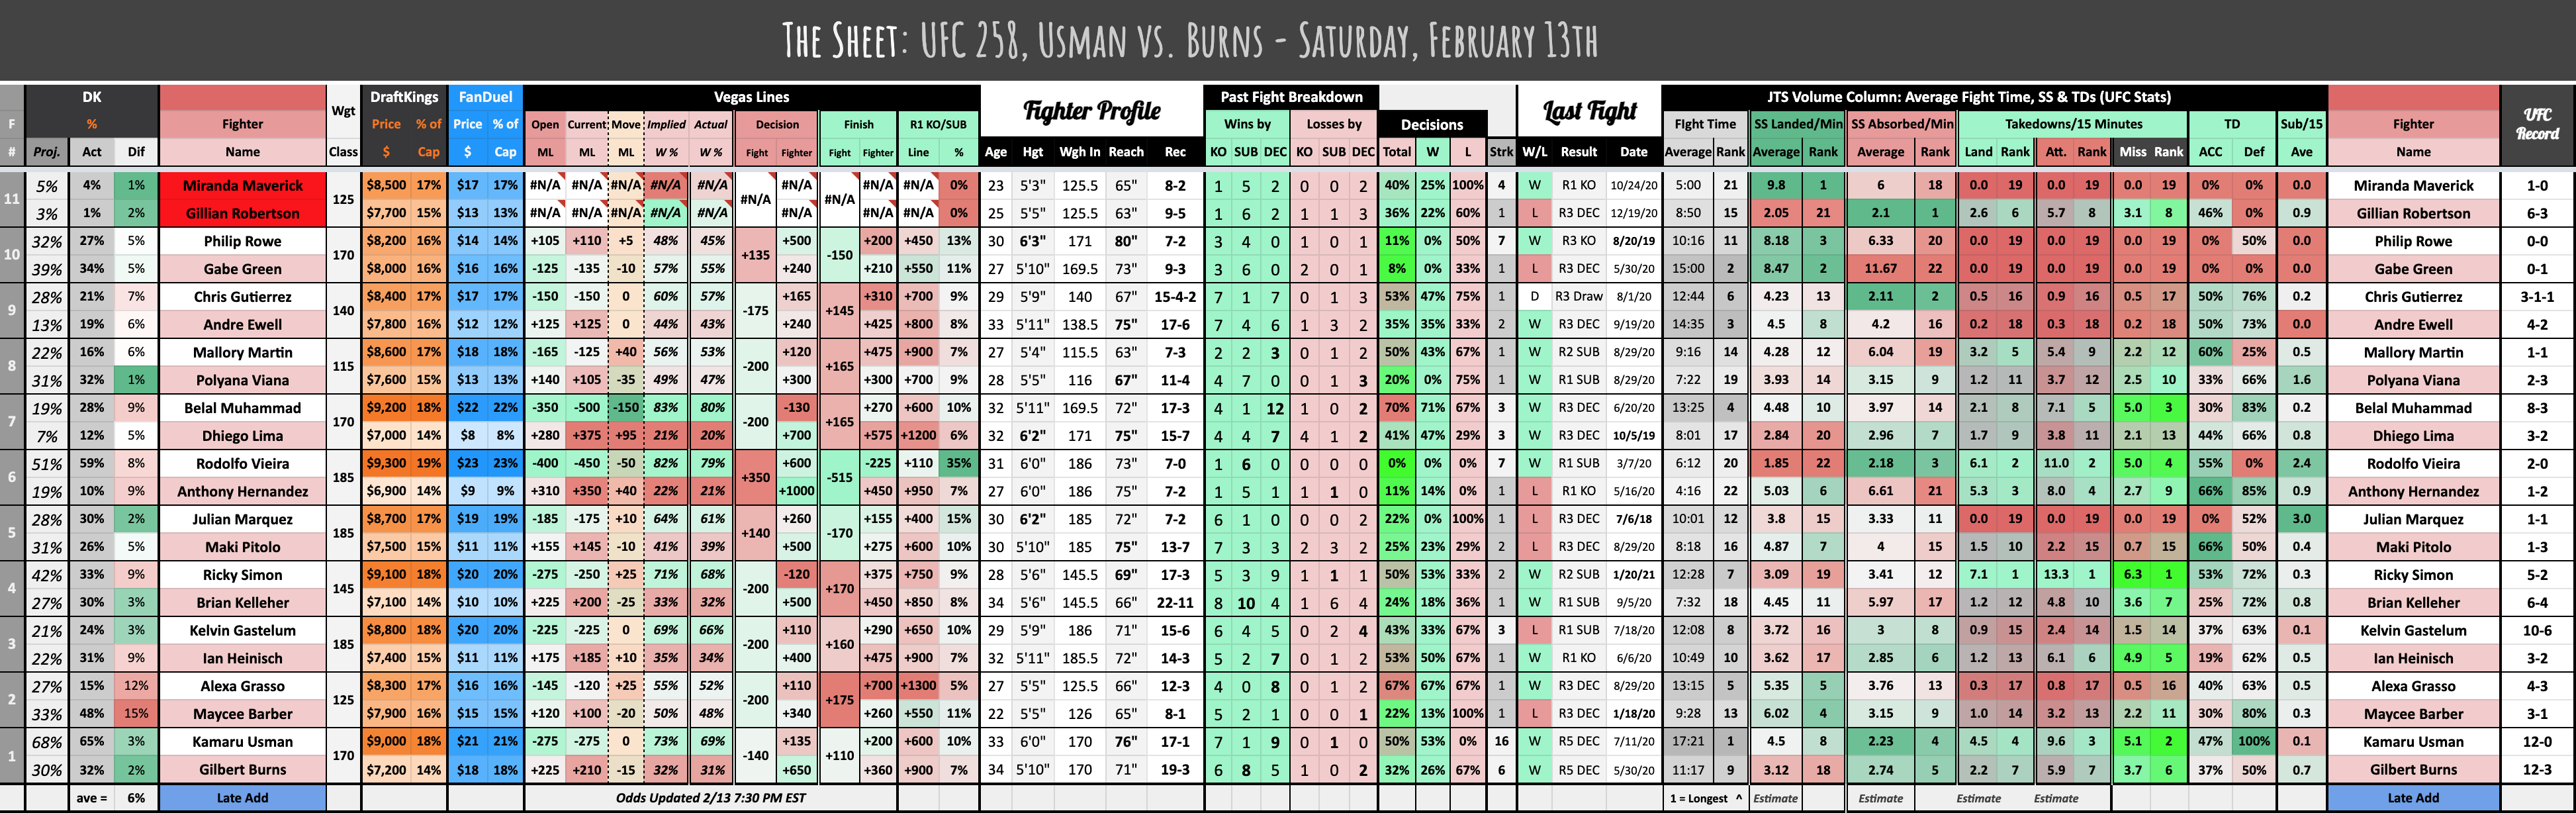 The Sheet: UFC 258, Usman vs. Burns - Saturday, February 13th